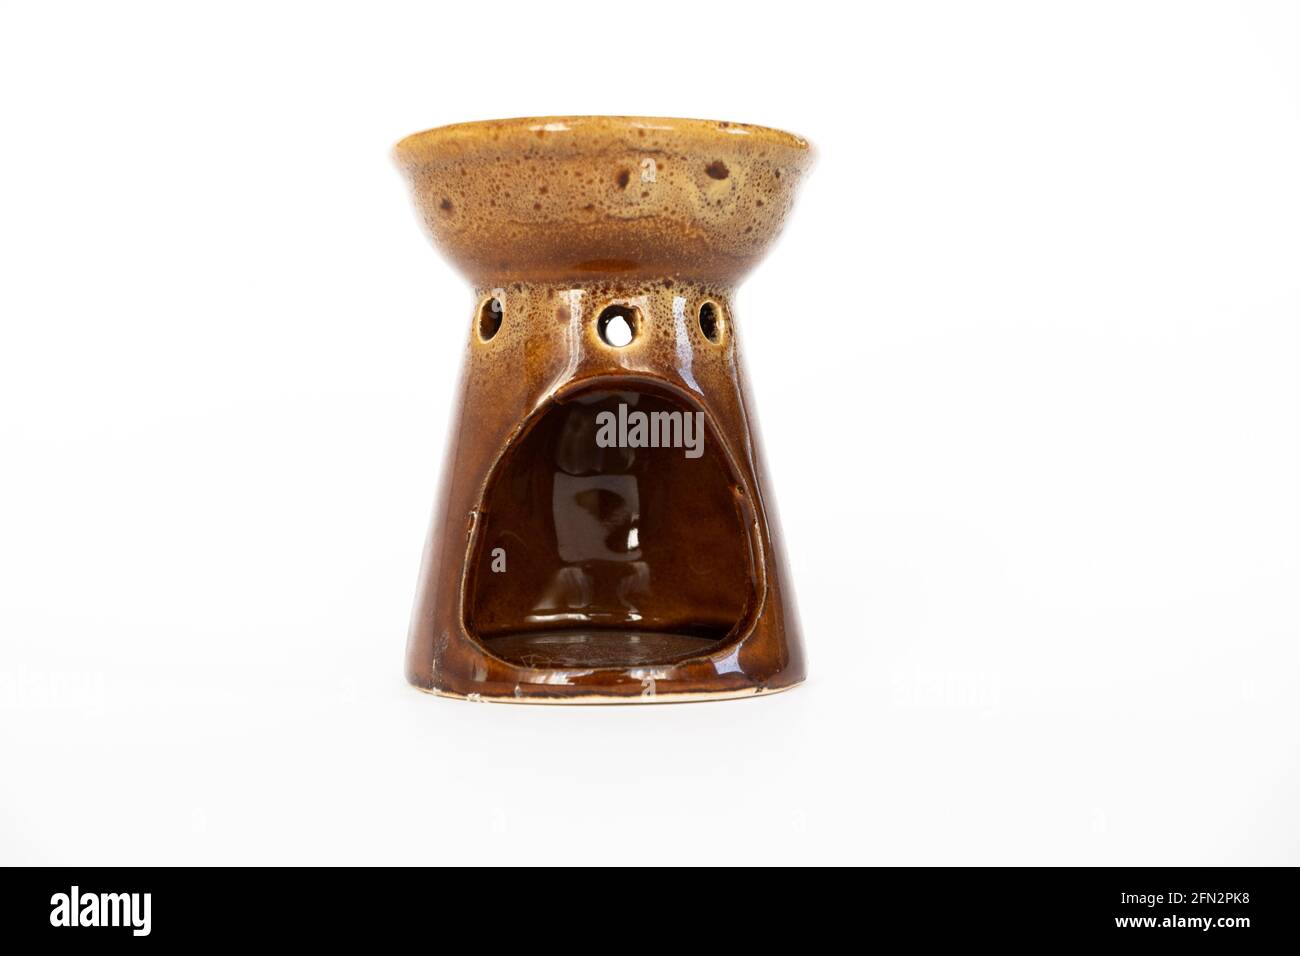 Ceramic Tealight Candle Holder Oil Burner. Stock Photo